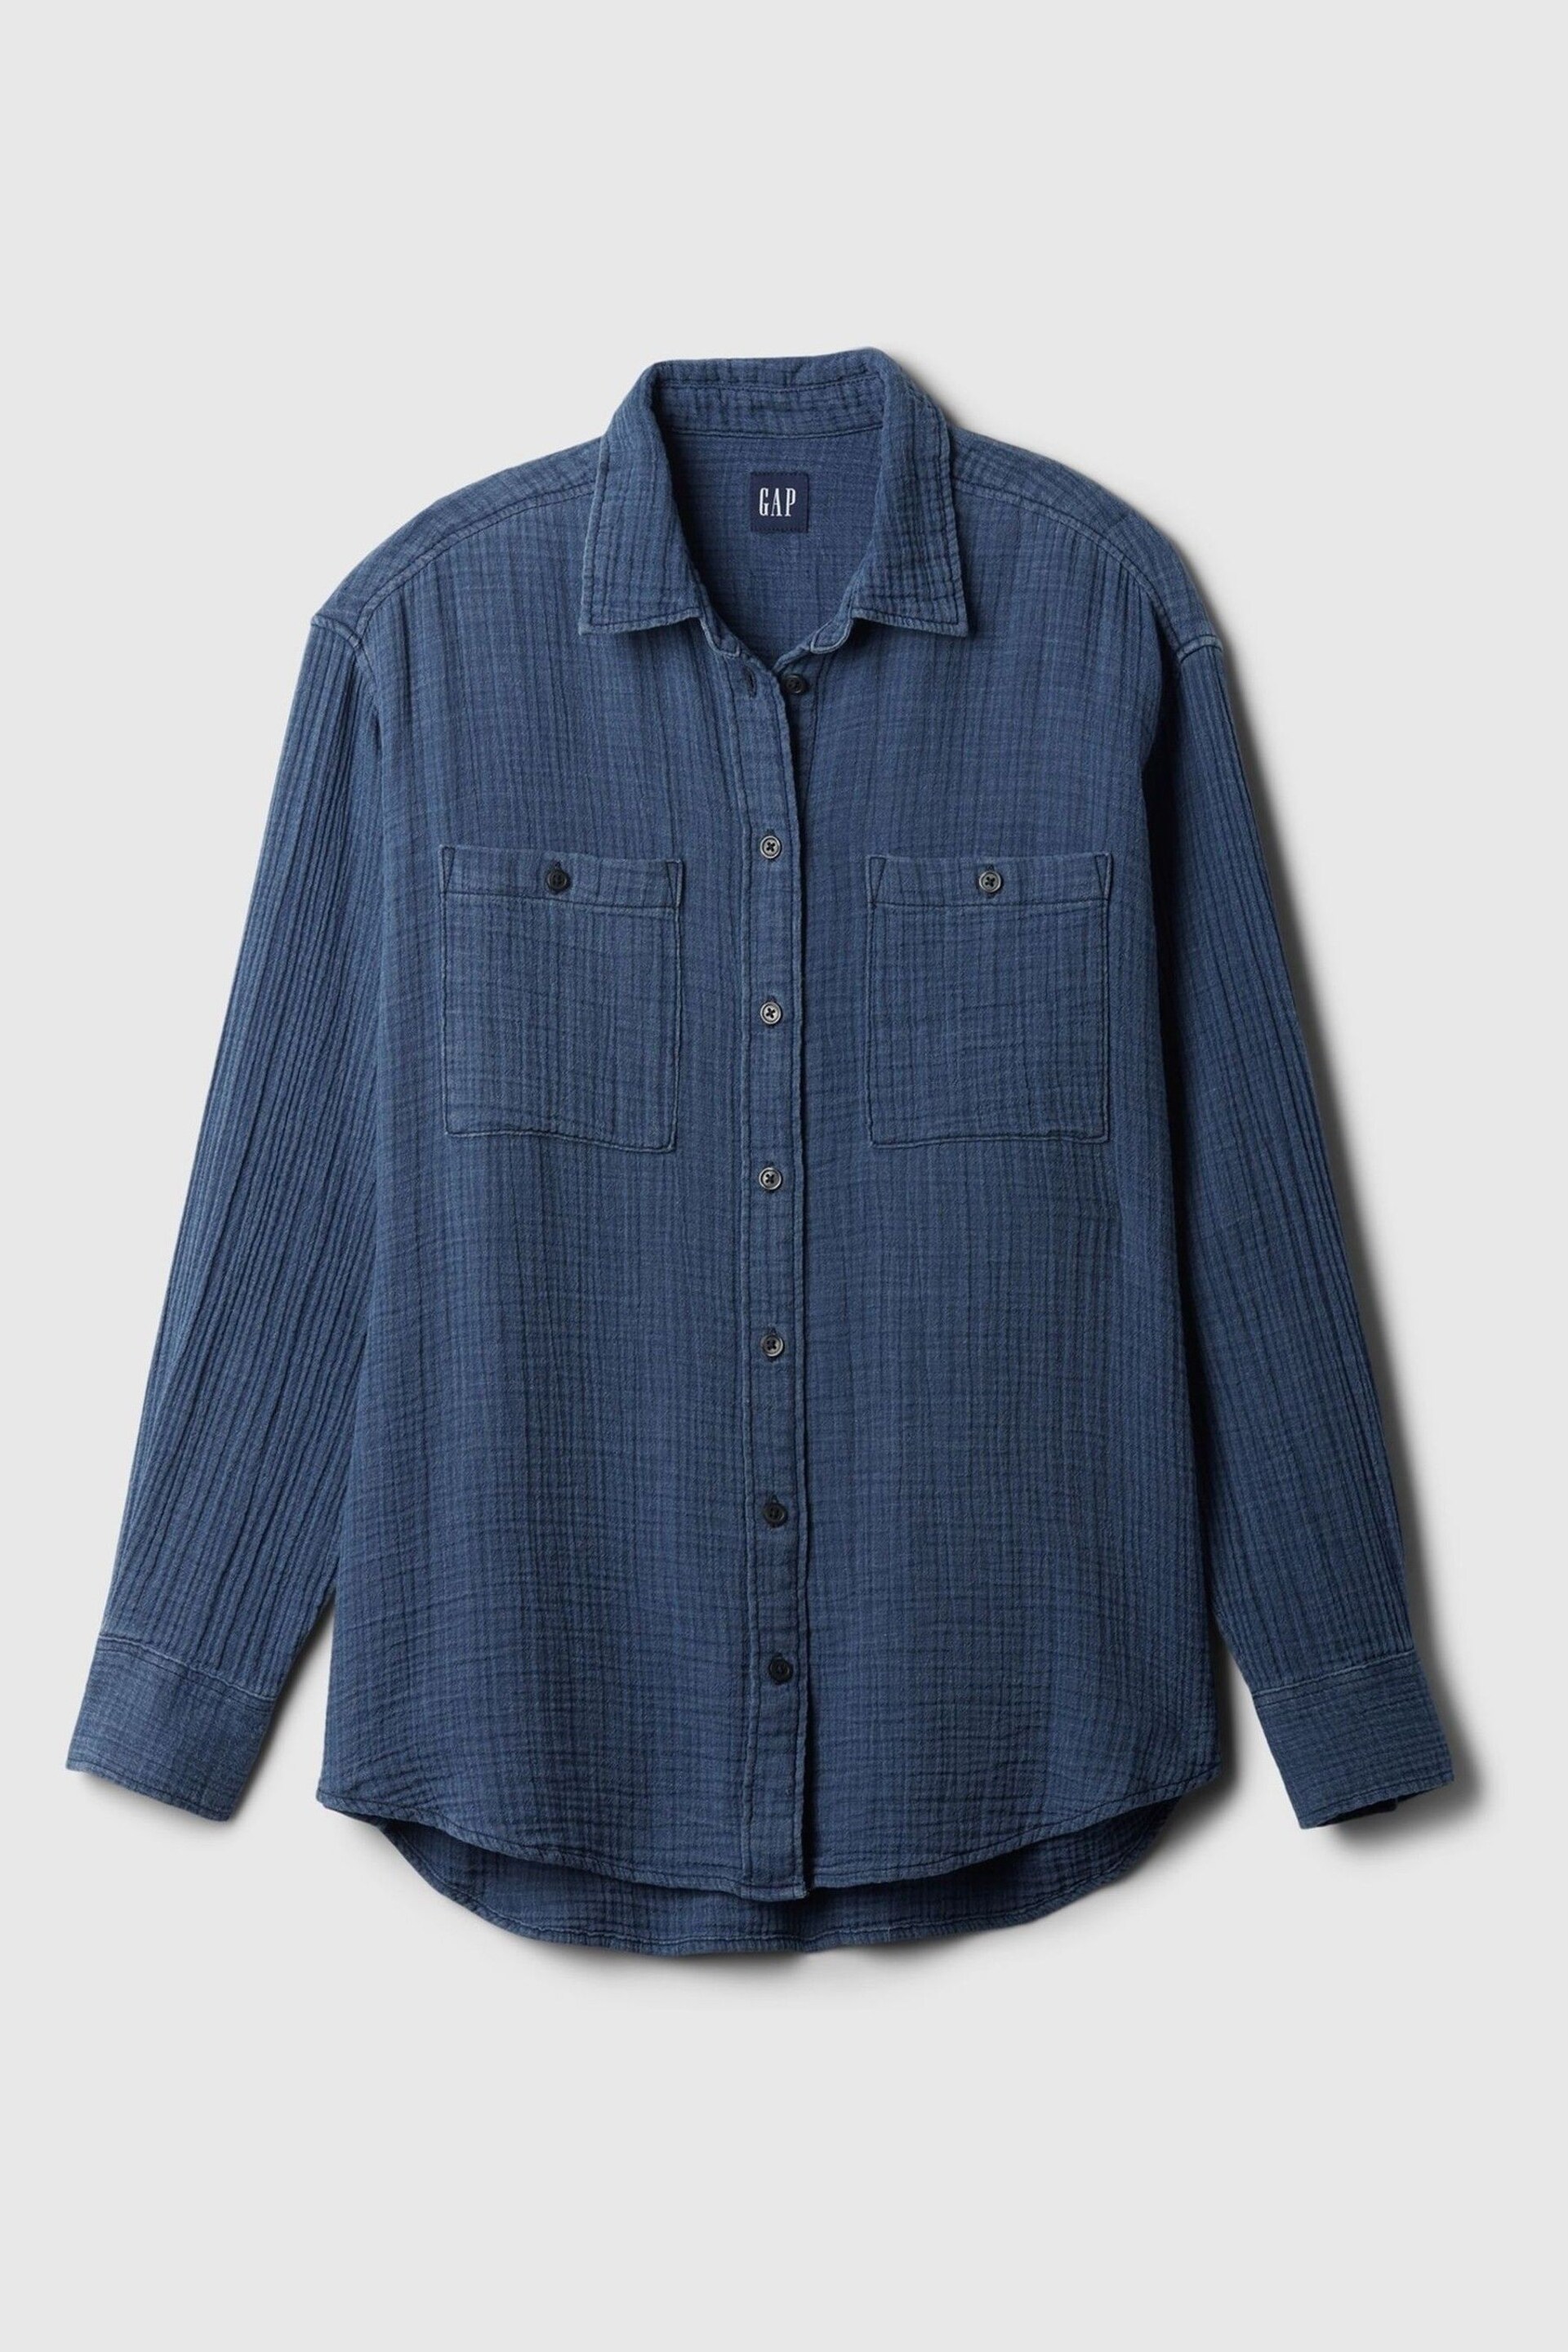 Gap Blue Crinkle Cotton Big Shirt - Image 4 of 4